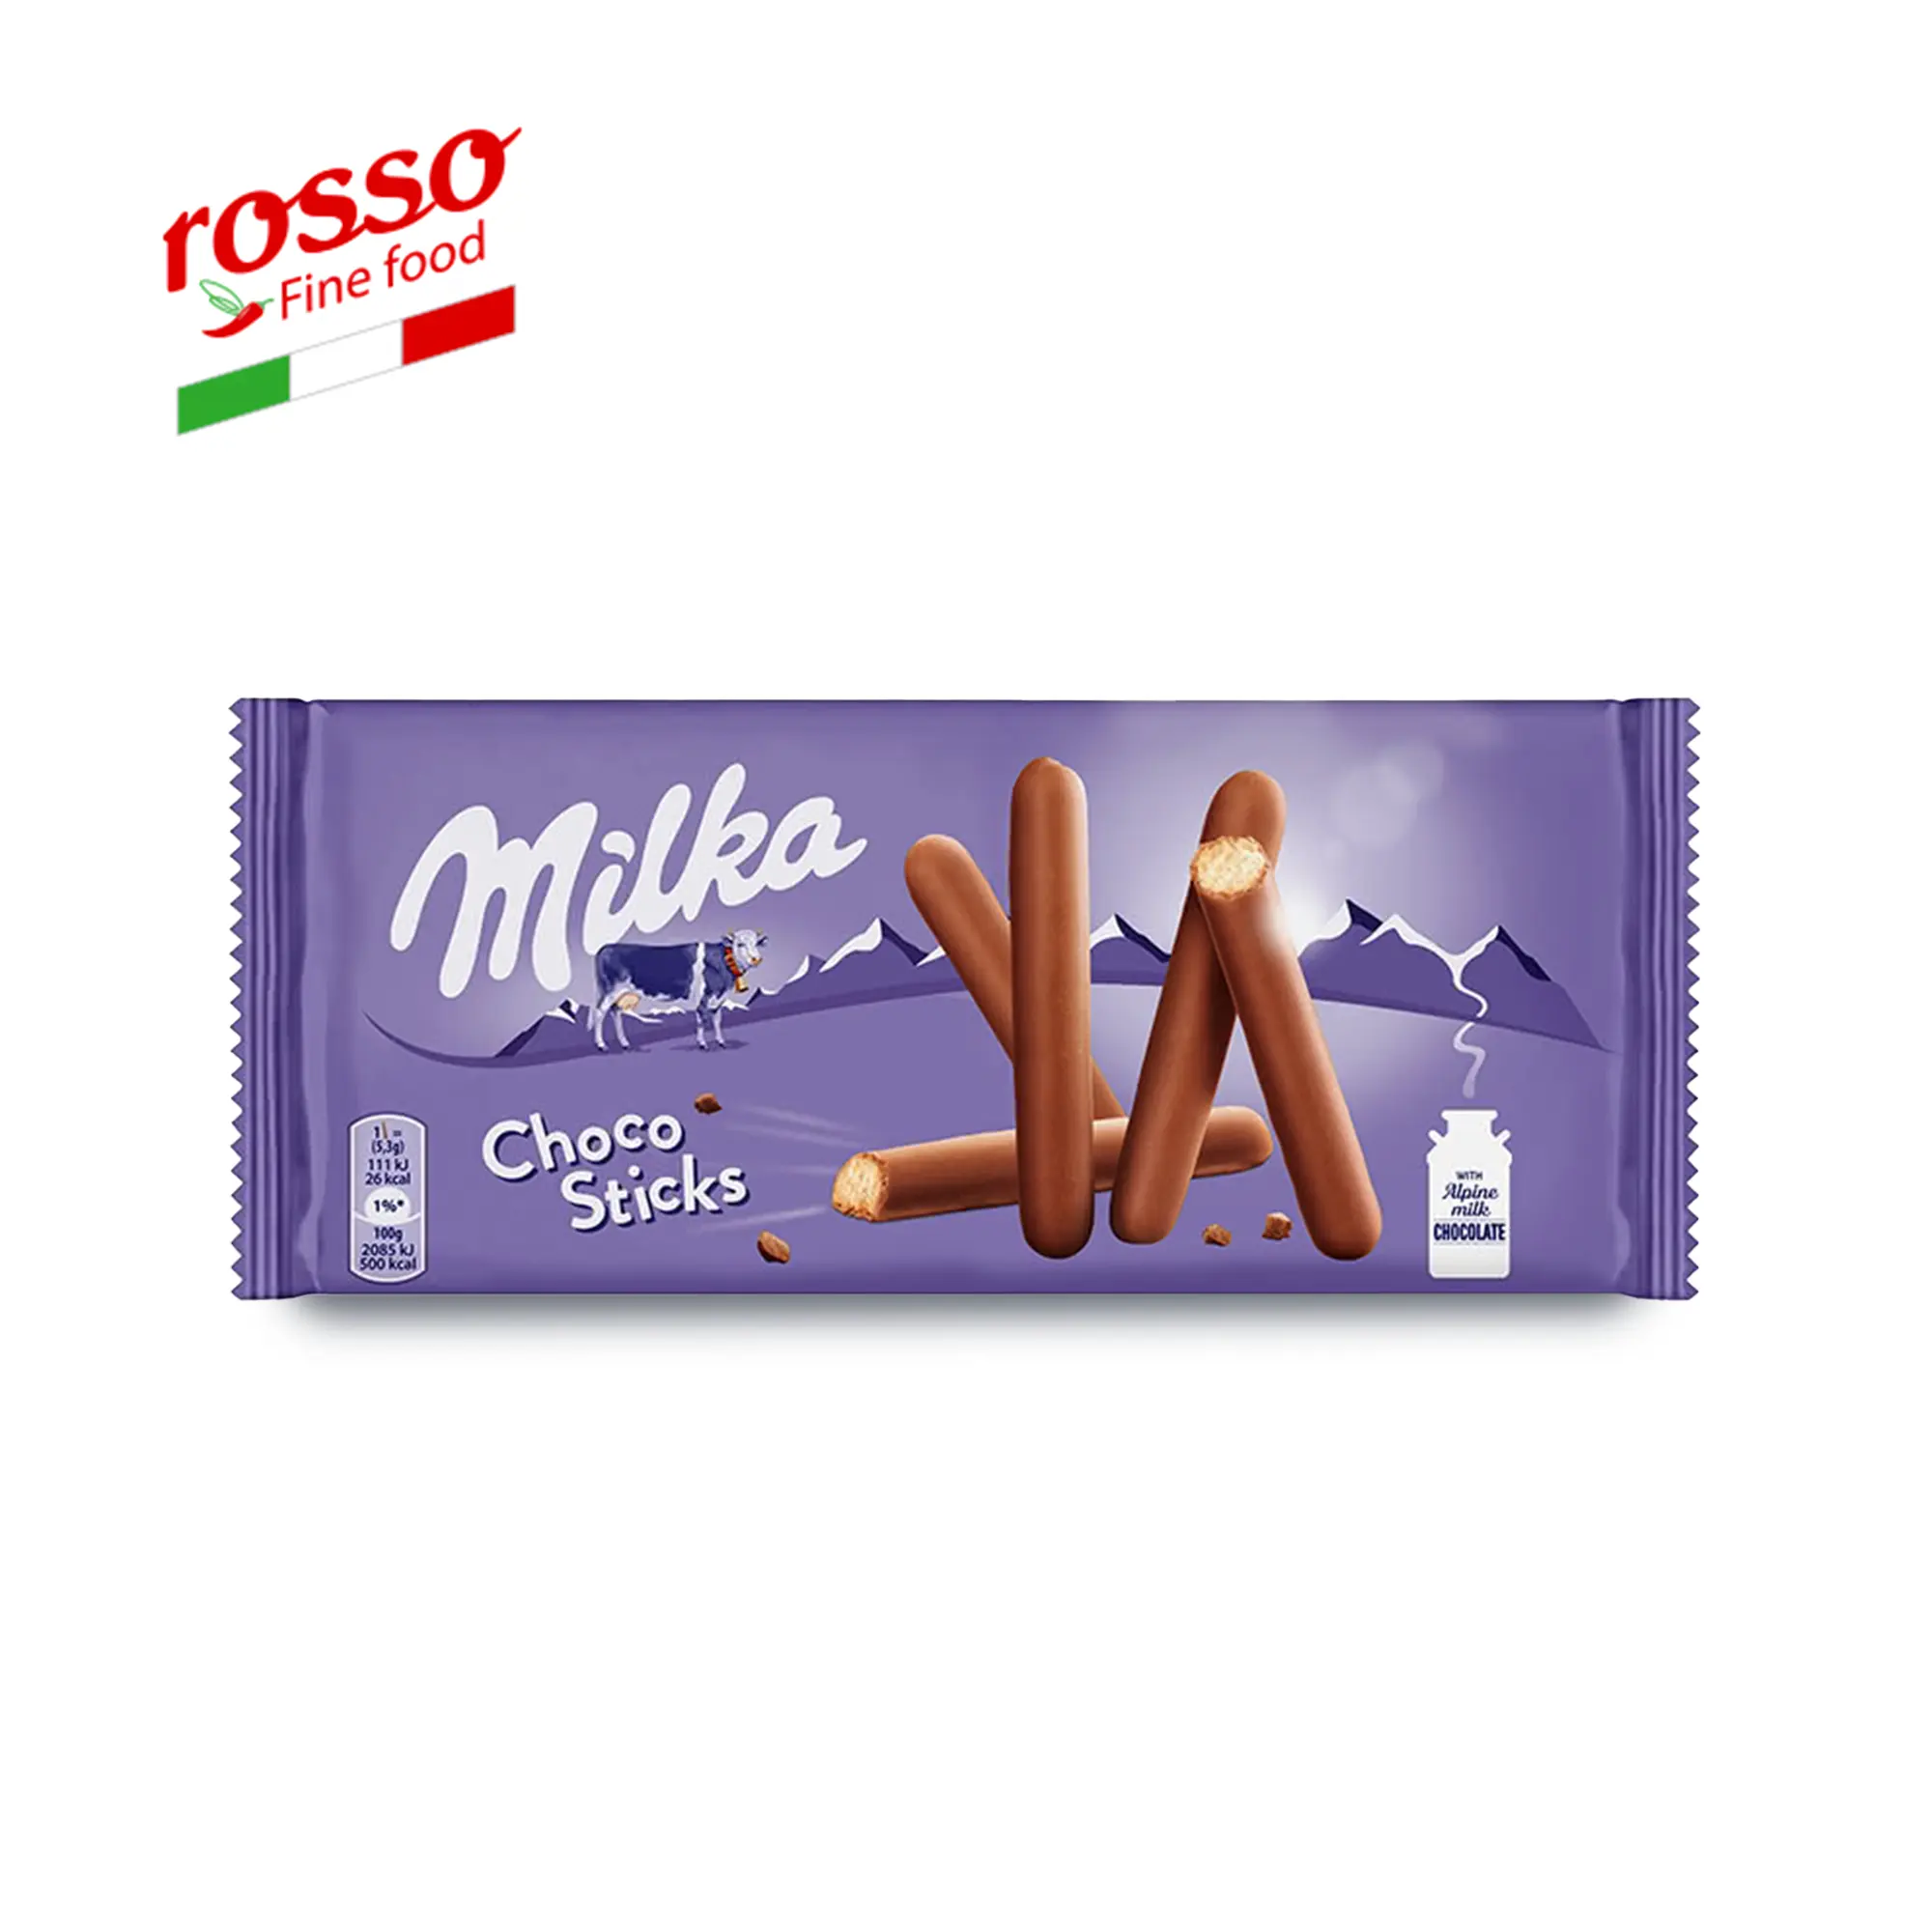 NewChocolate BarSweet ChocolateMilka Biscuits MILKA, Lila Stix for sale and export